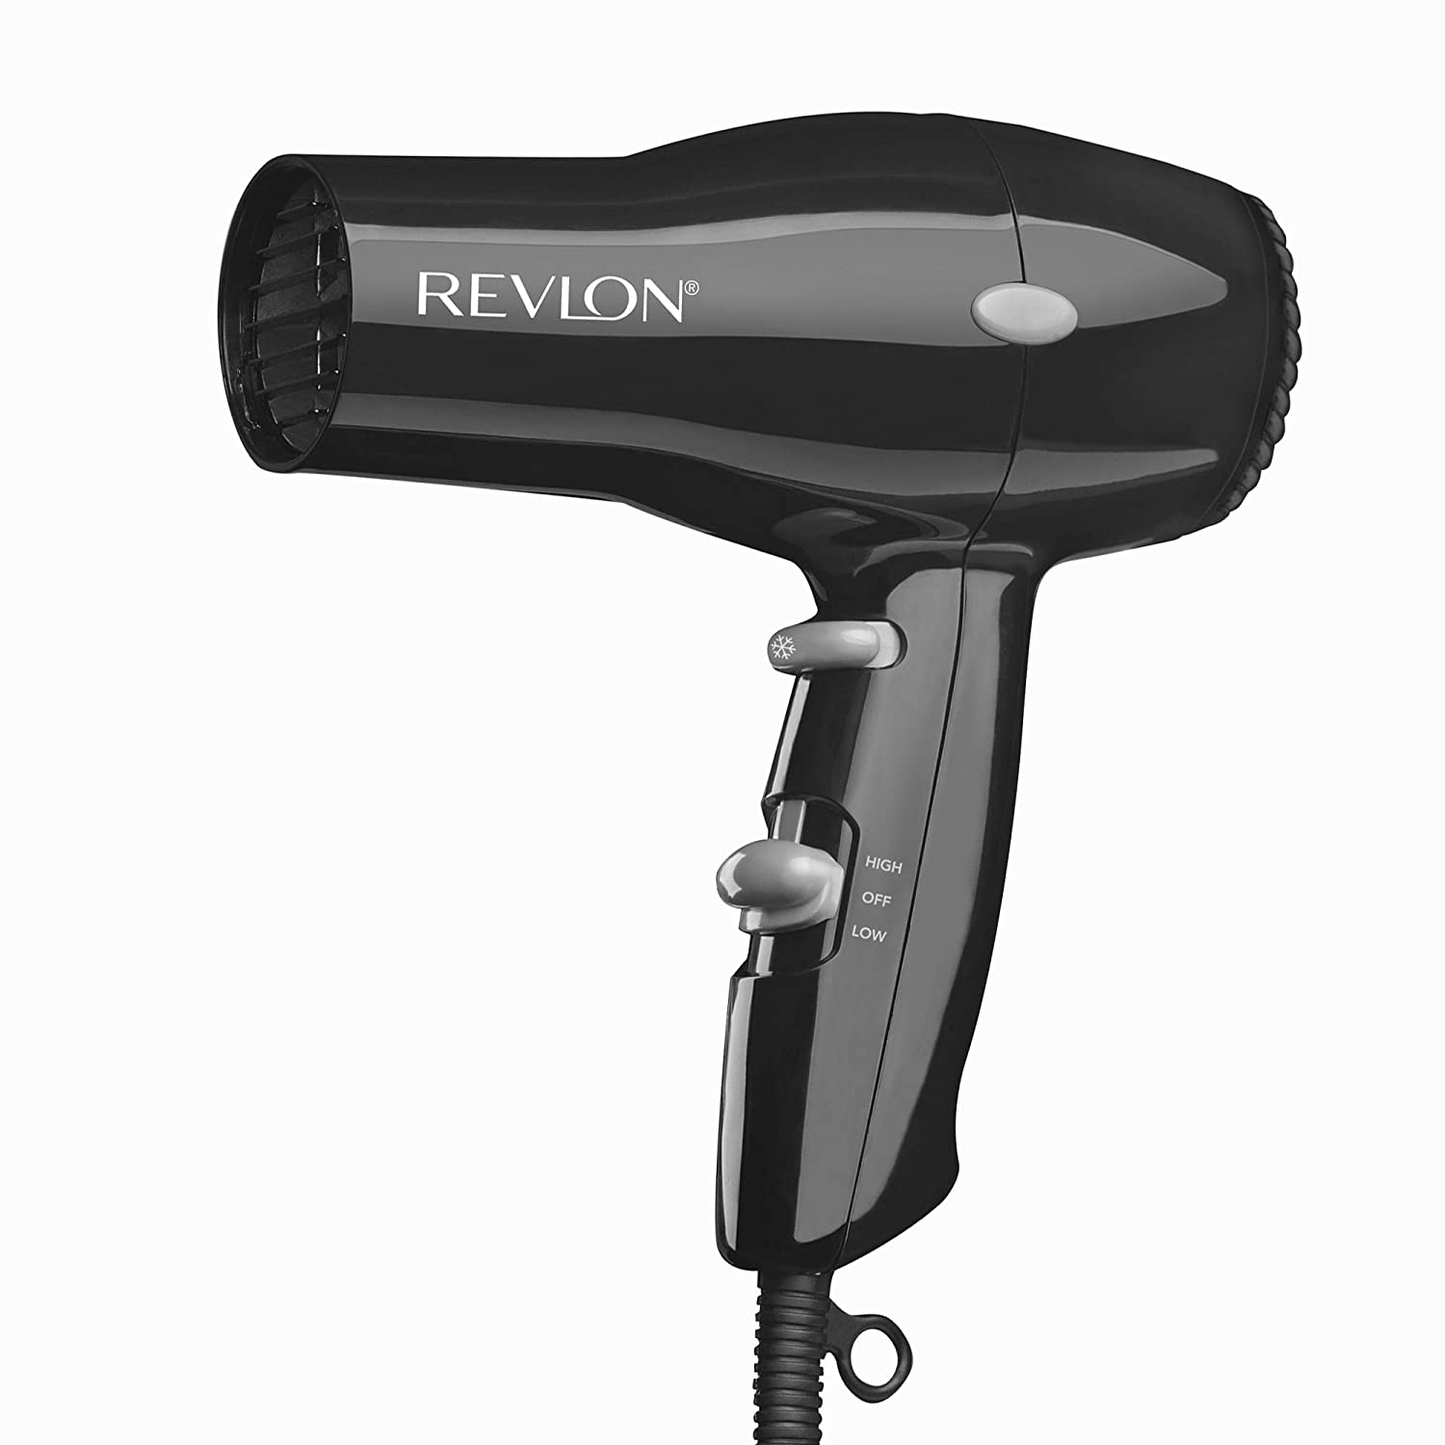 REVLON The Essential, Lightweight + Compact Travel Hair Dryer